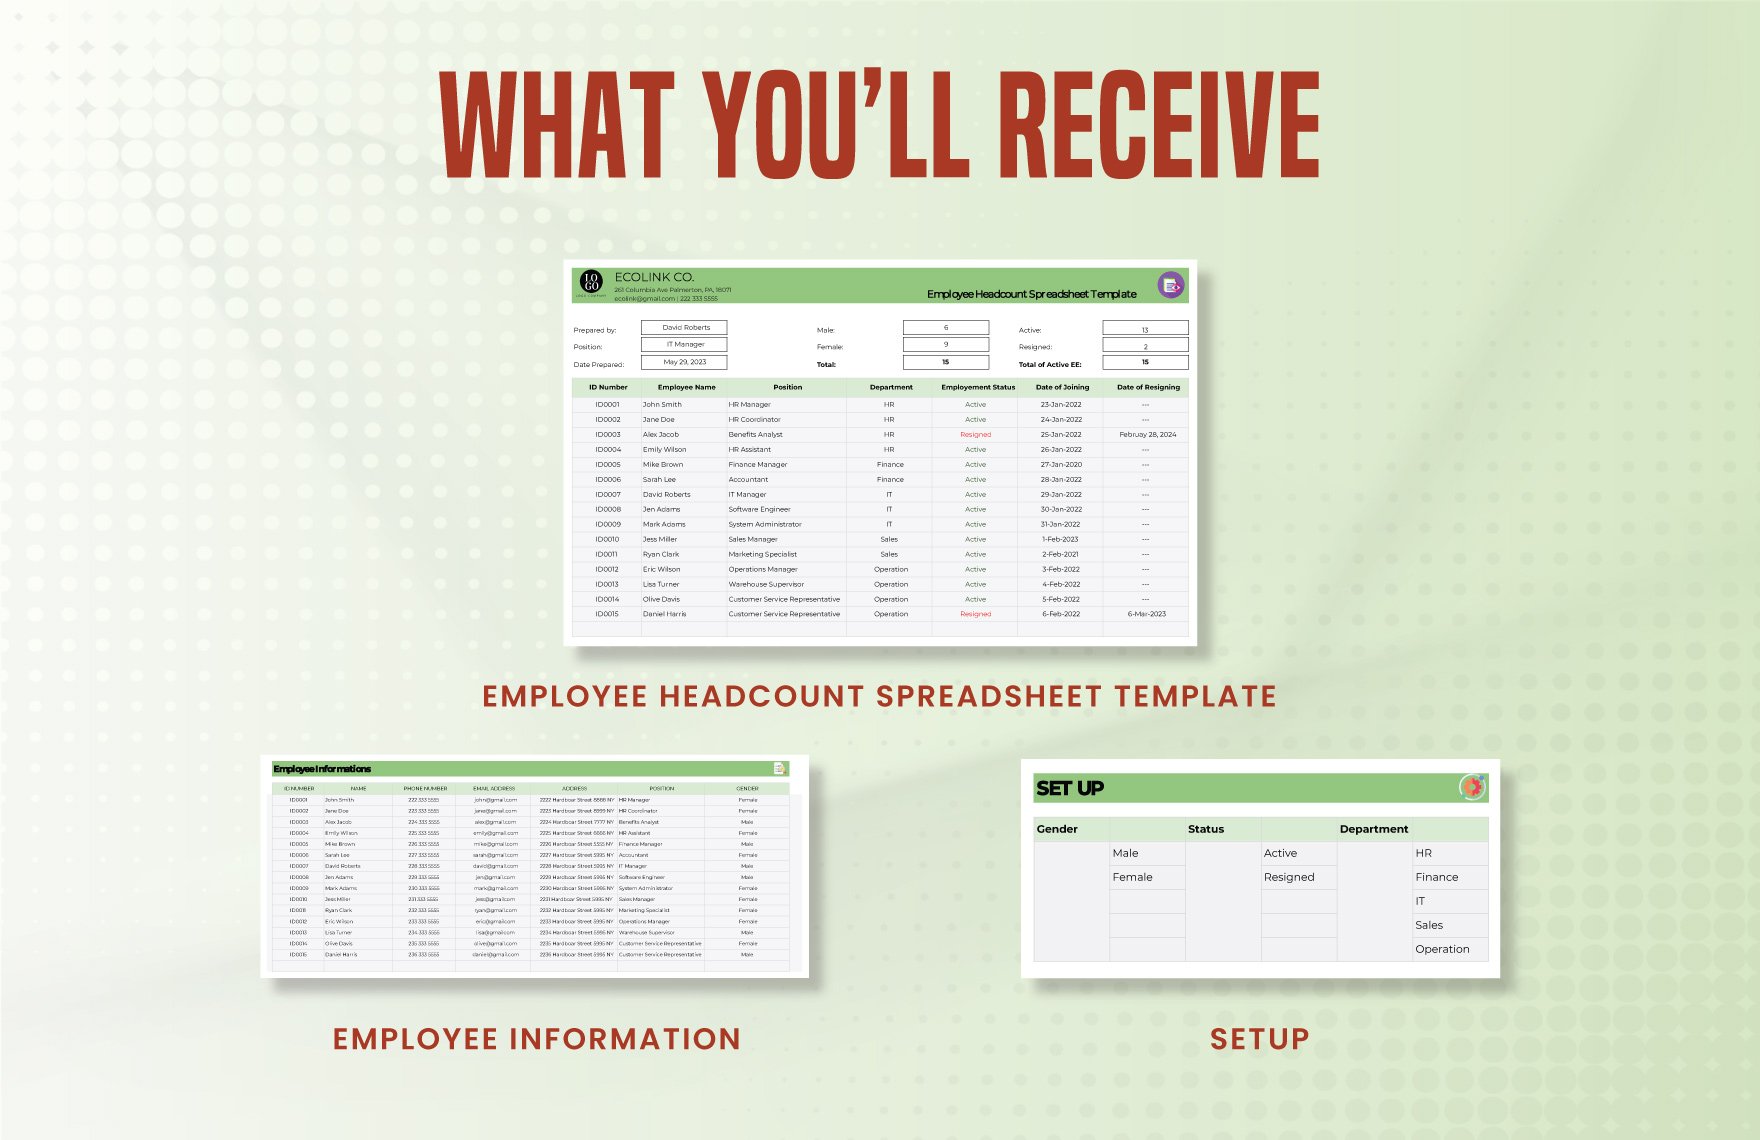 Employee Headcount Spreadsheet Template